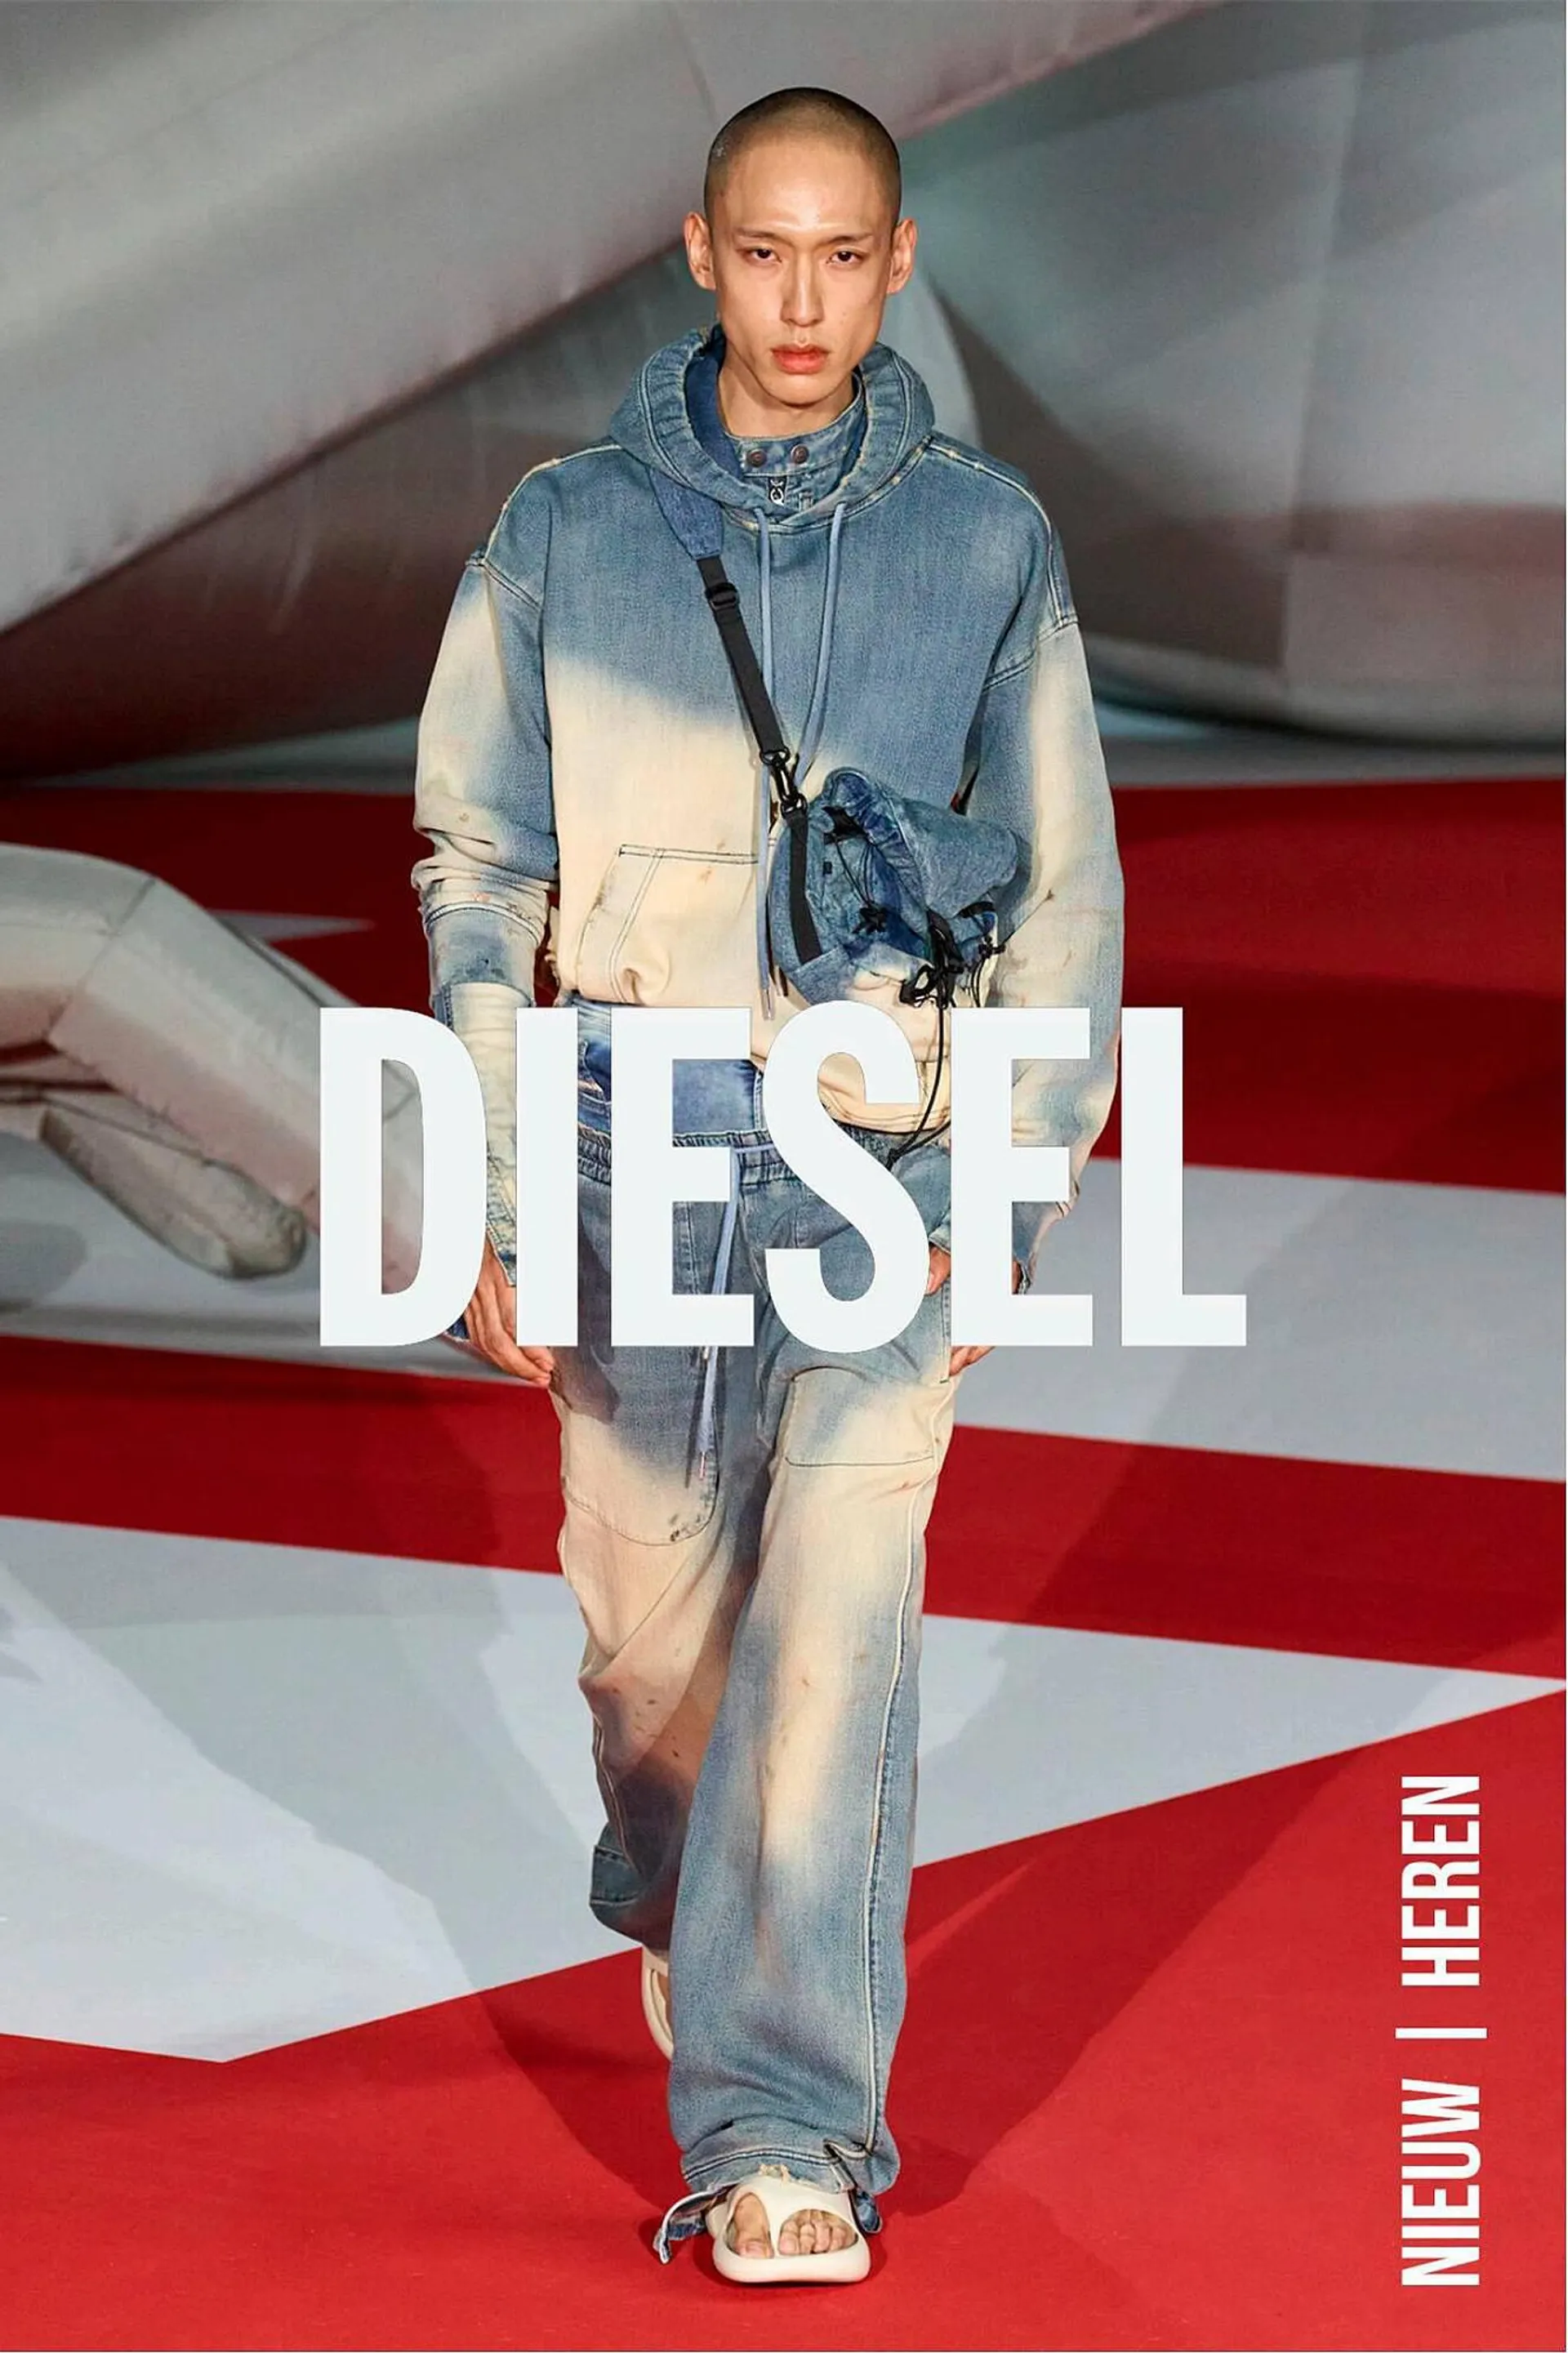 Diesel folder - 1